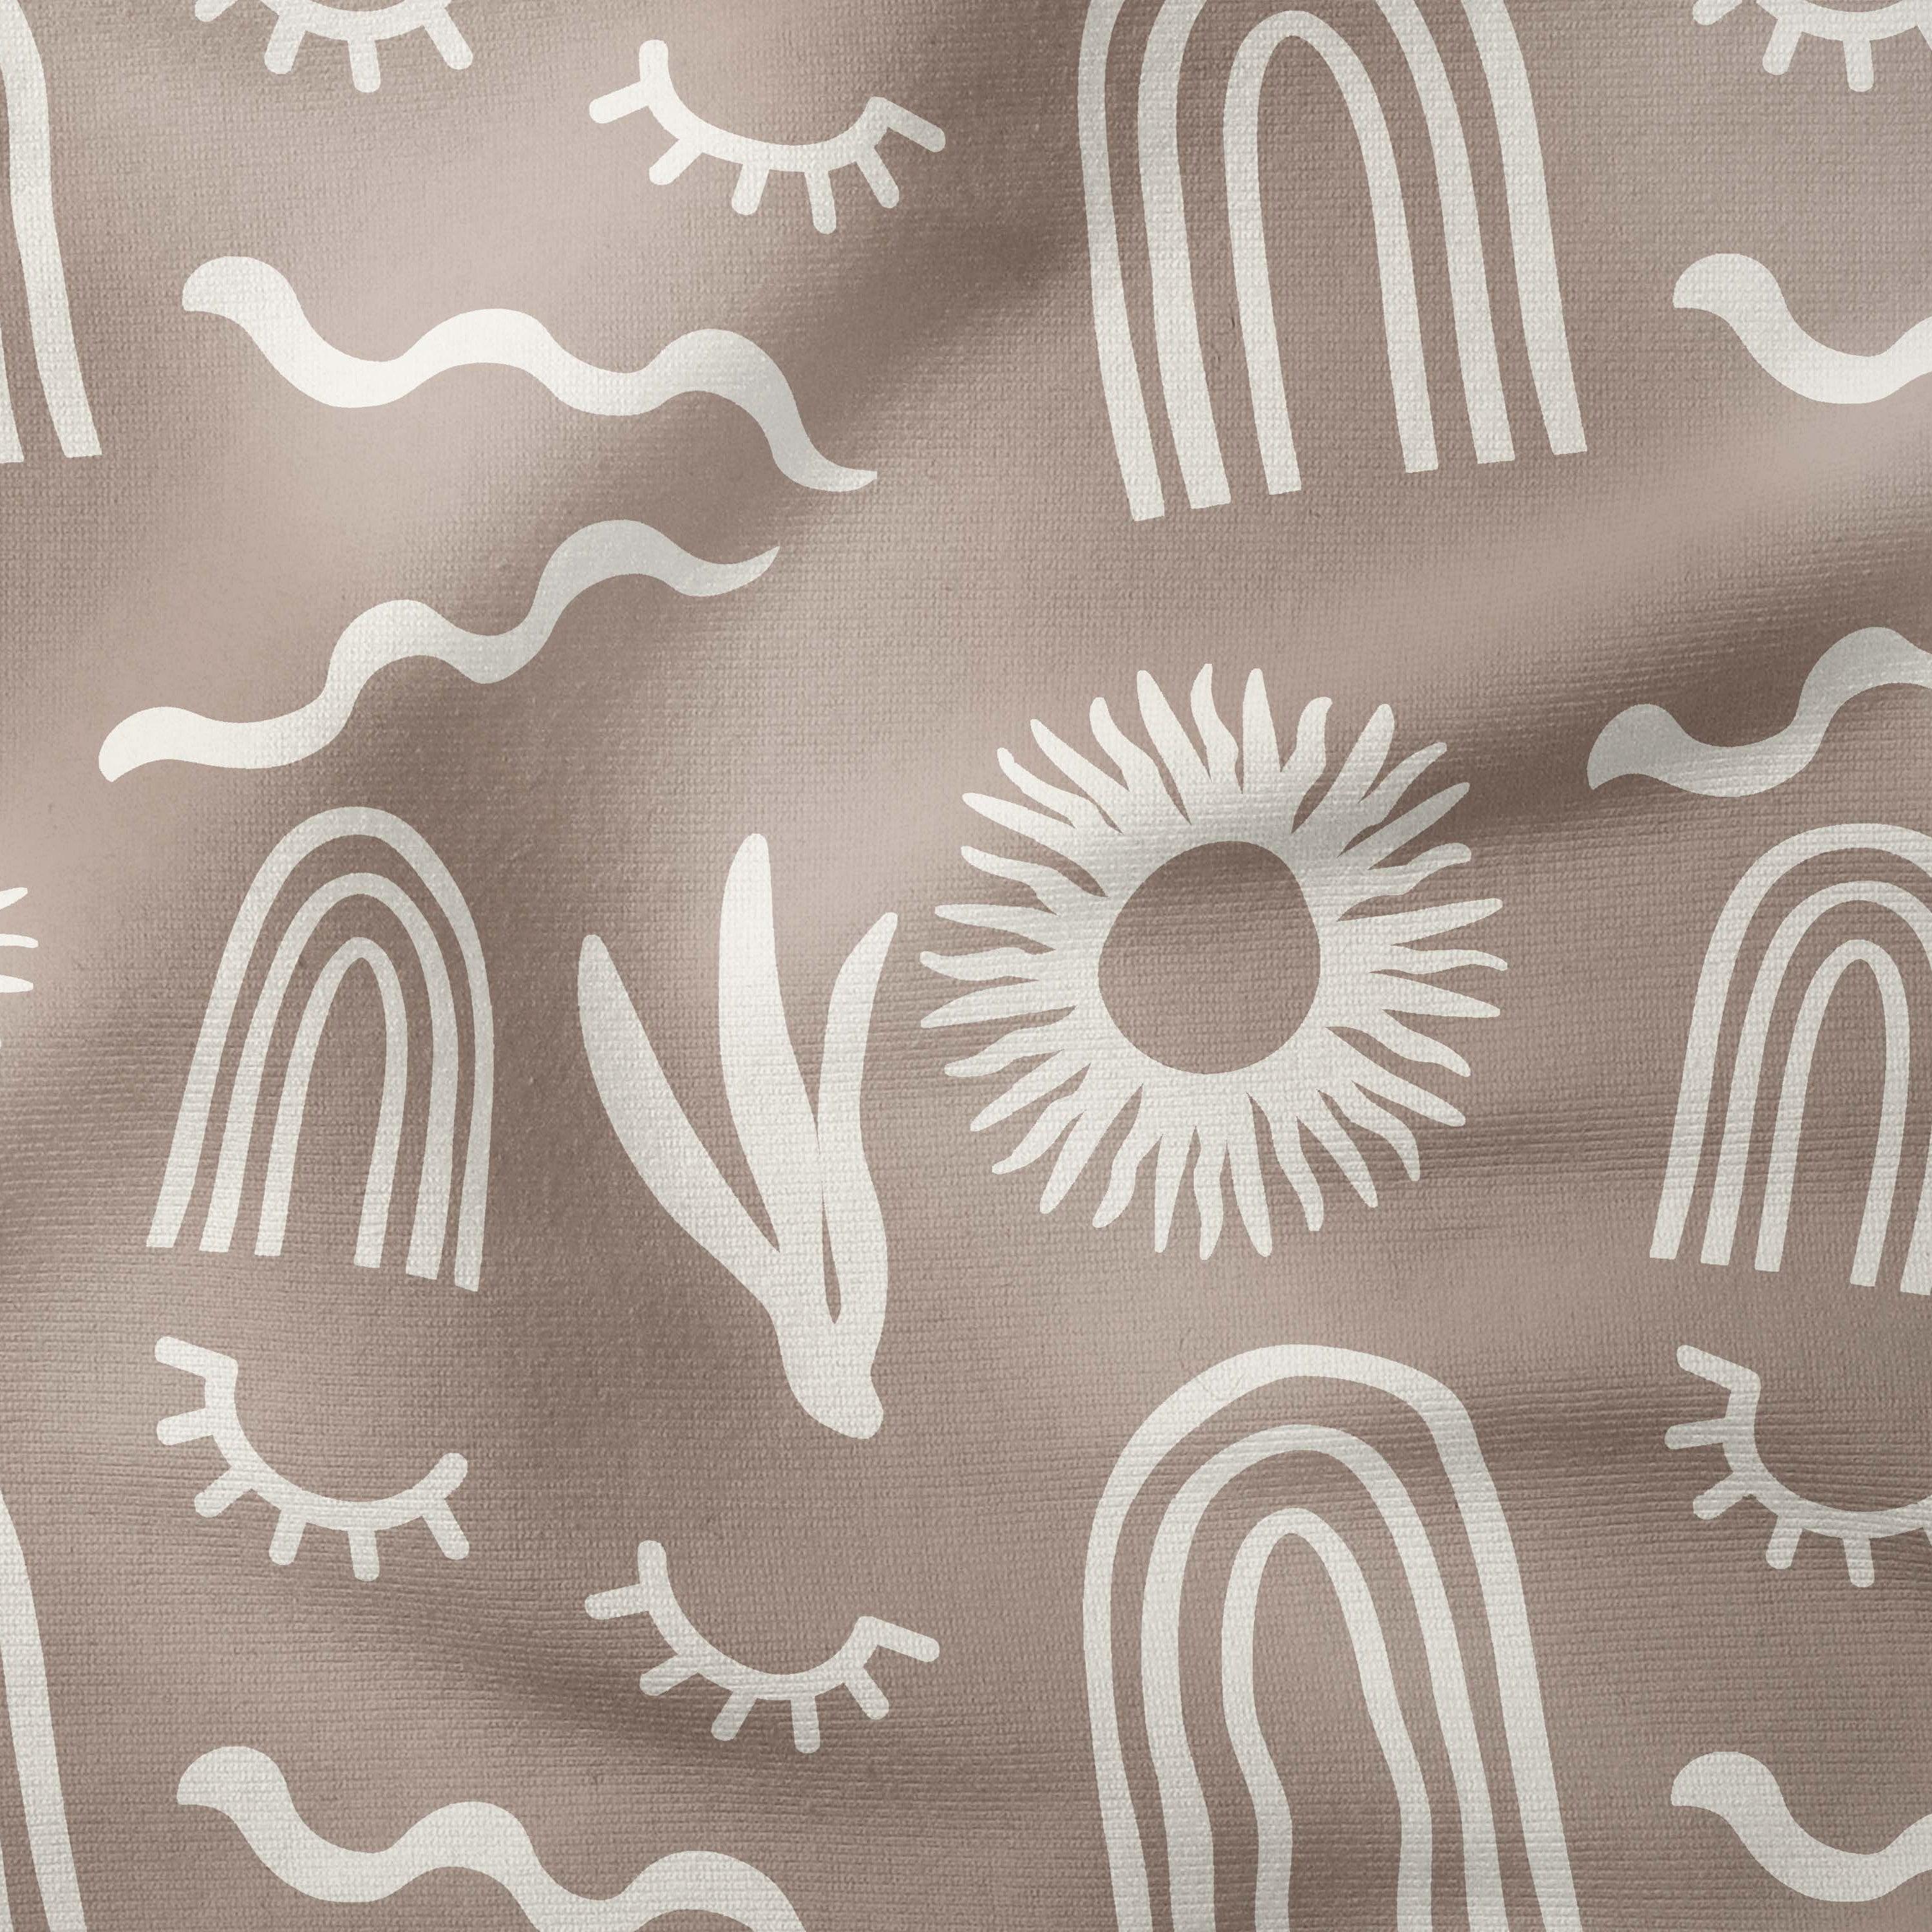 Abstract Shapes-Art Print Fabric-Melco Fabrics-Tofu on Chocolate-Cotton Poplin (110gsm)-Online-Fabric-Shop-Australia